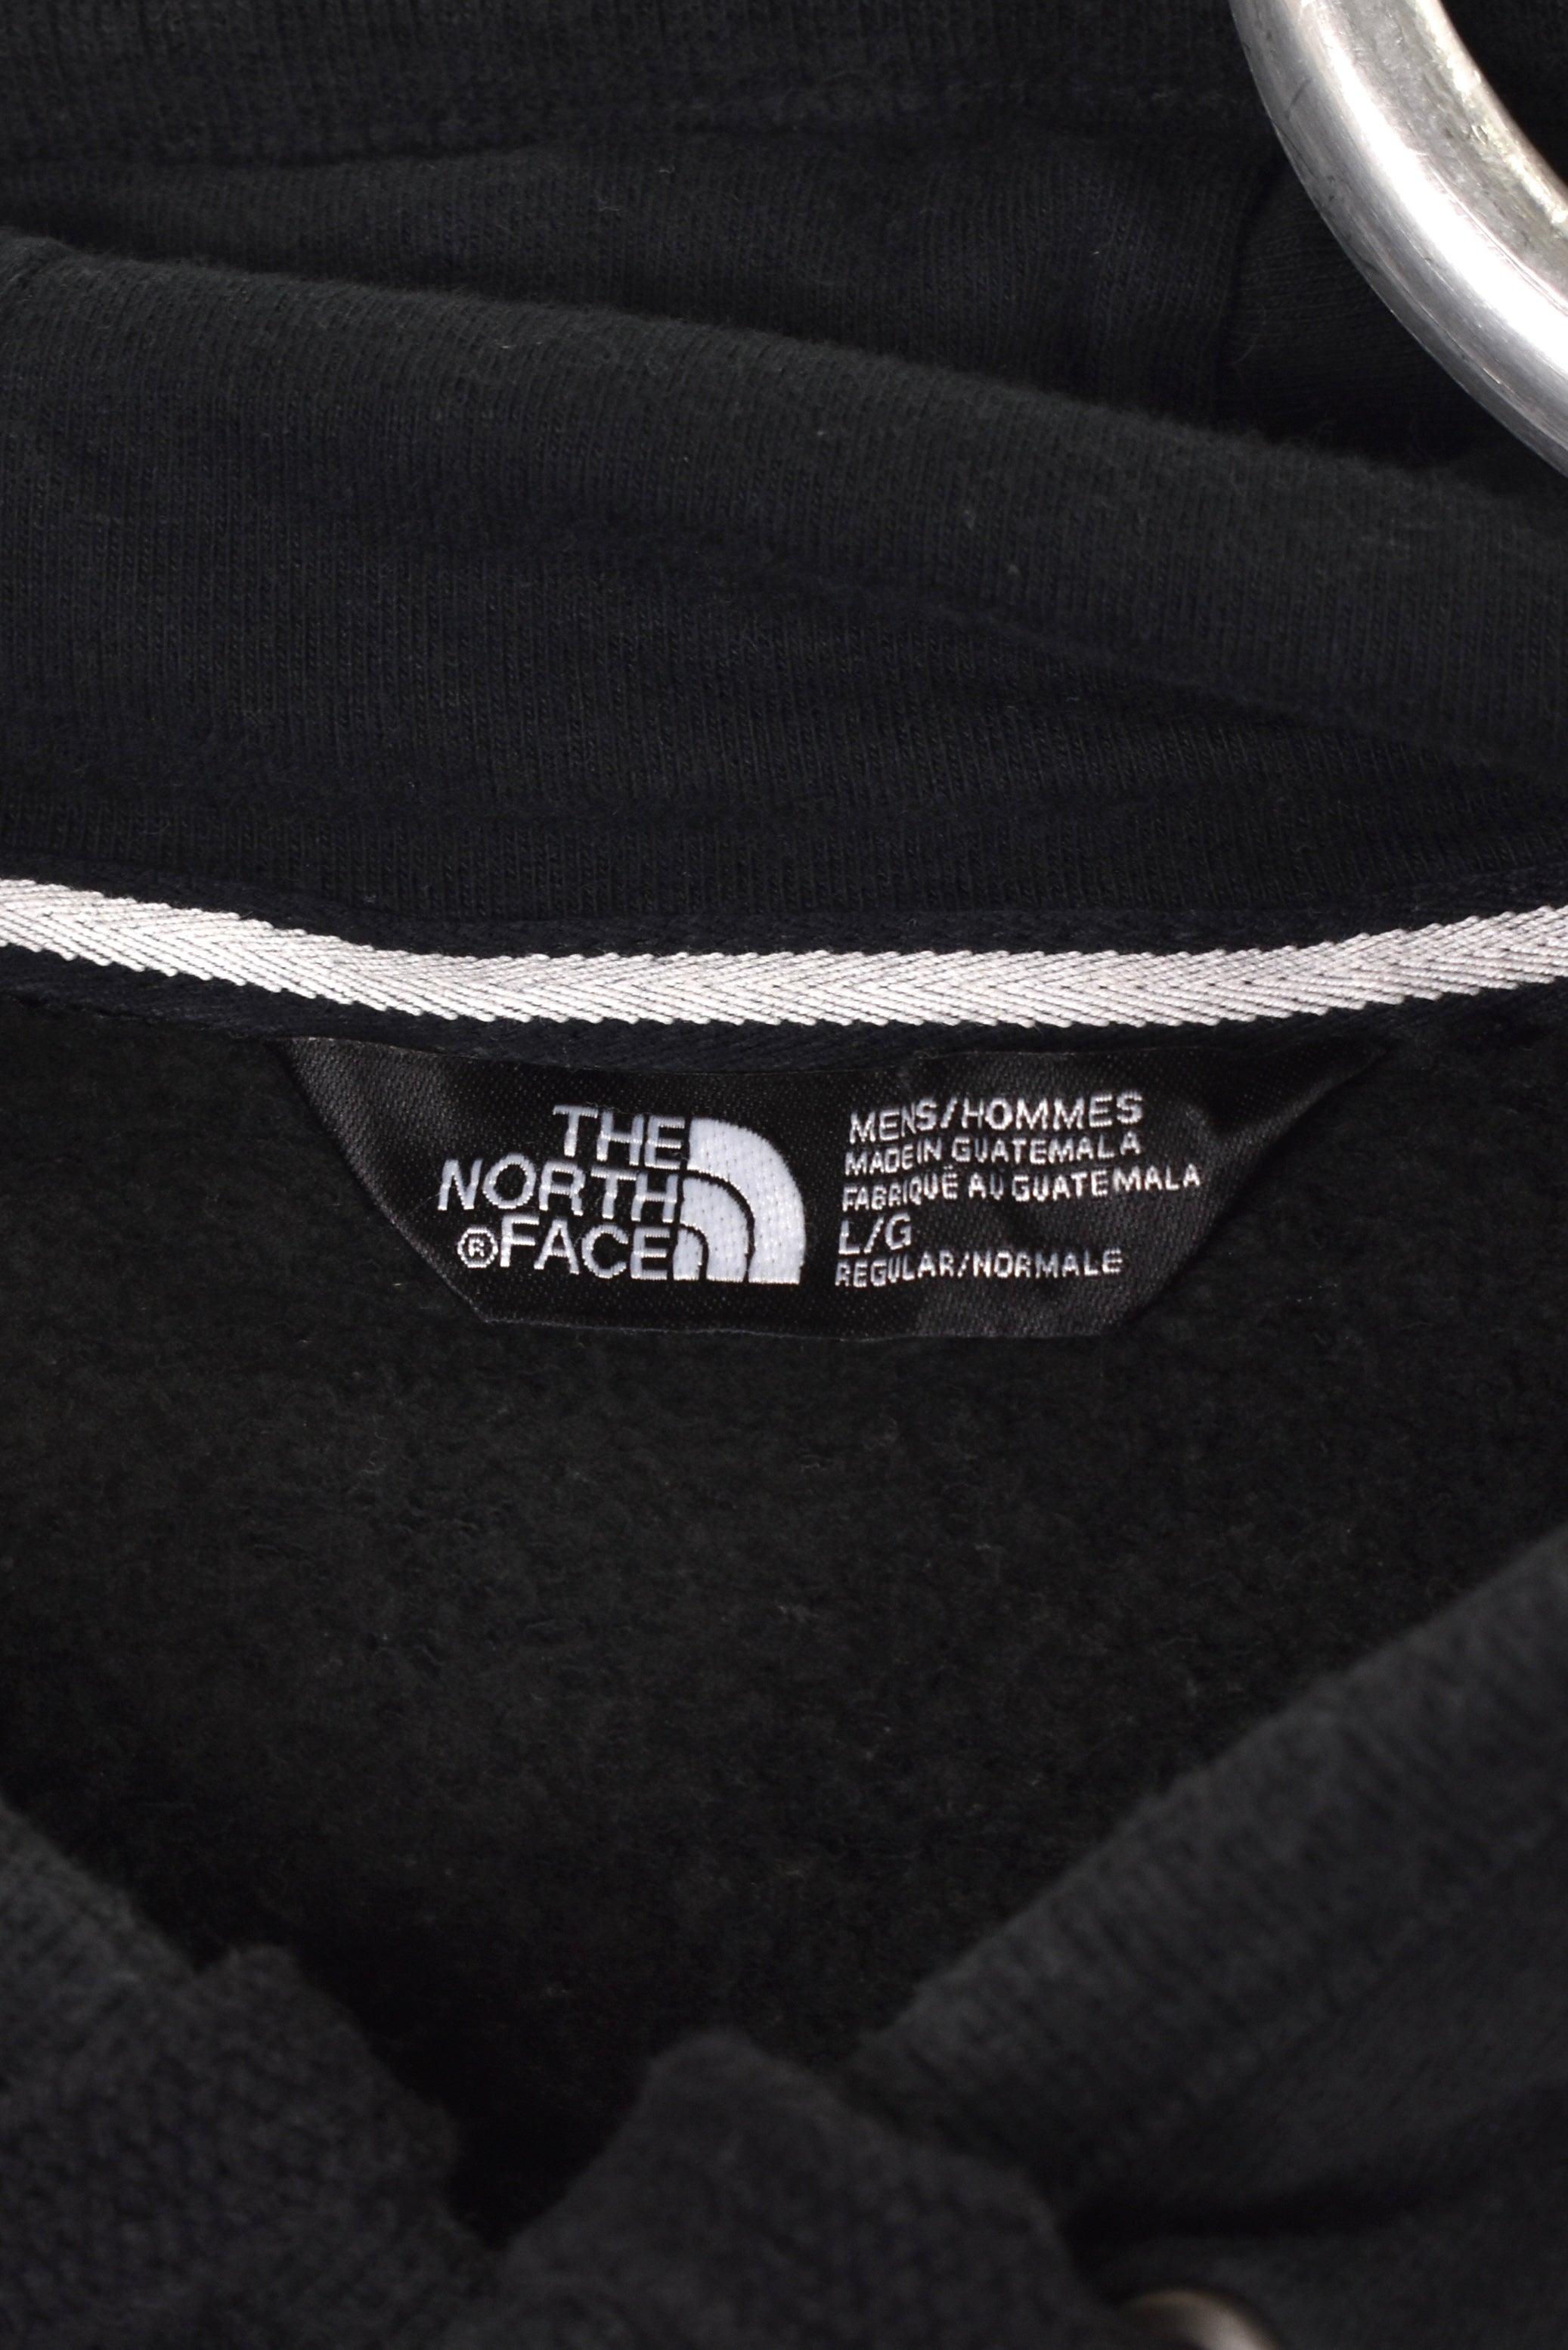 Vintage The North Face hoodie, black embroidered sweatshirt - Large